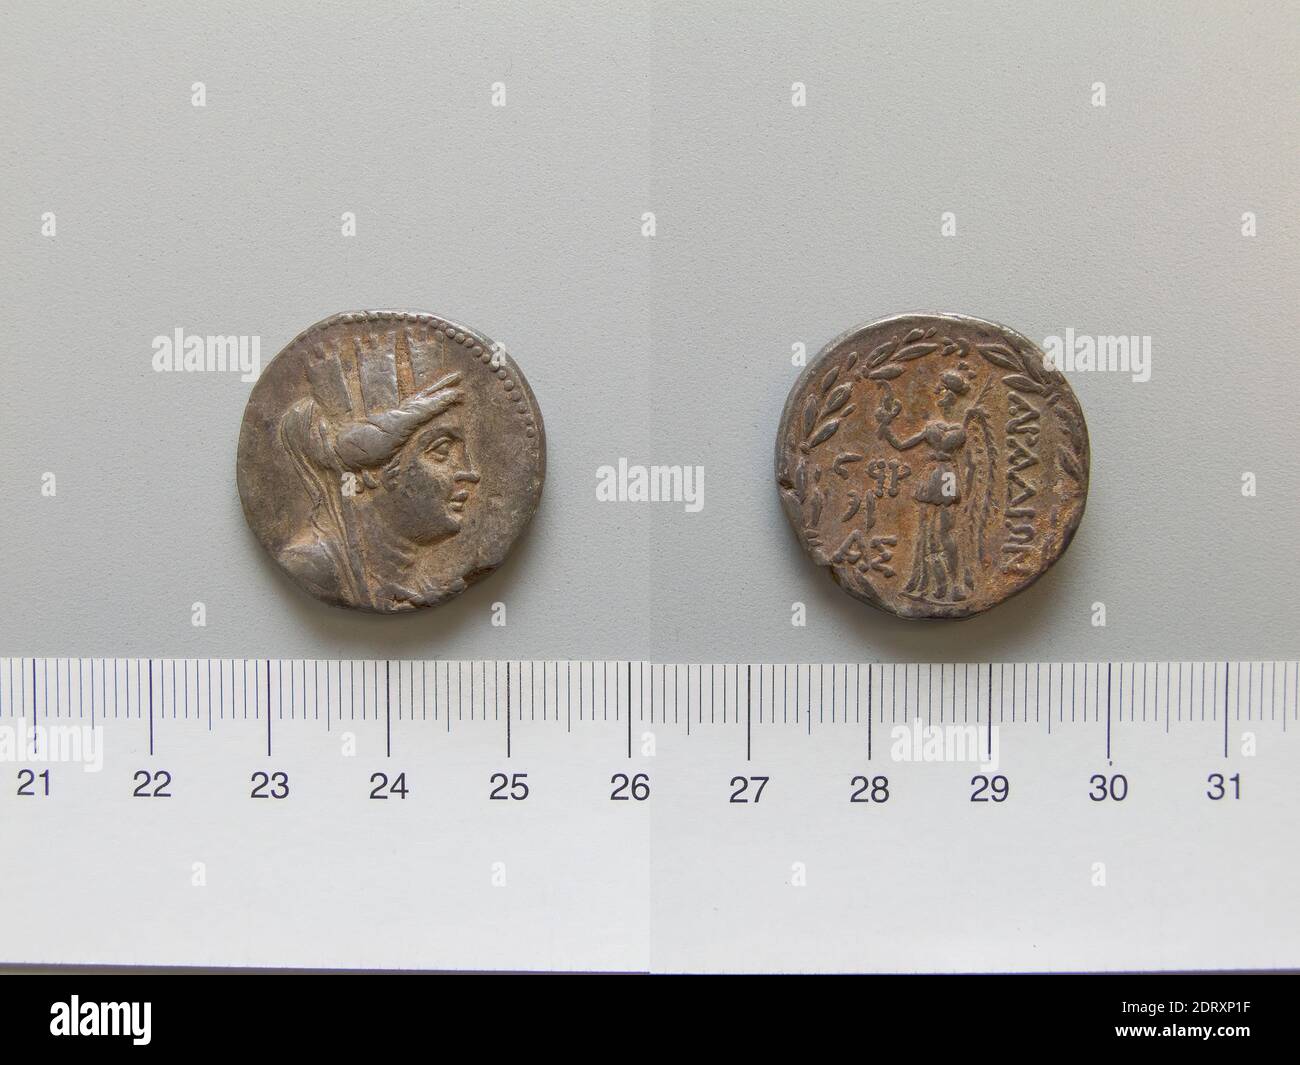 Mint: Aradus, Tetradrachm from Aradus, 64–63 B.C., Silver, 14.91 g, 12:00, 25.6 mm, Made in Aradus, Phoenicia, Greek, 1st century B.C., Numismatics Stock Photo